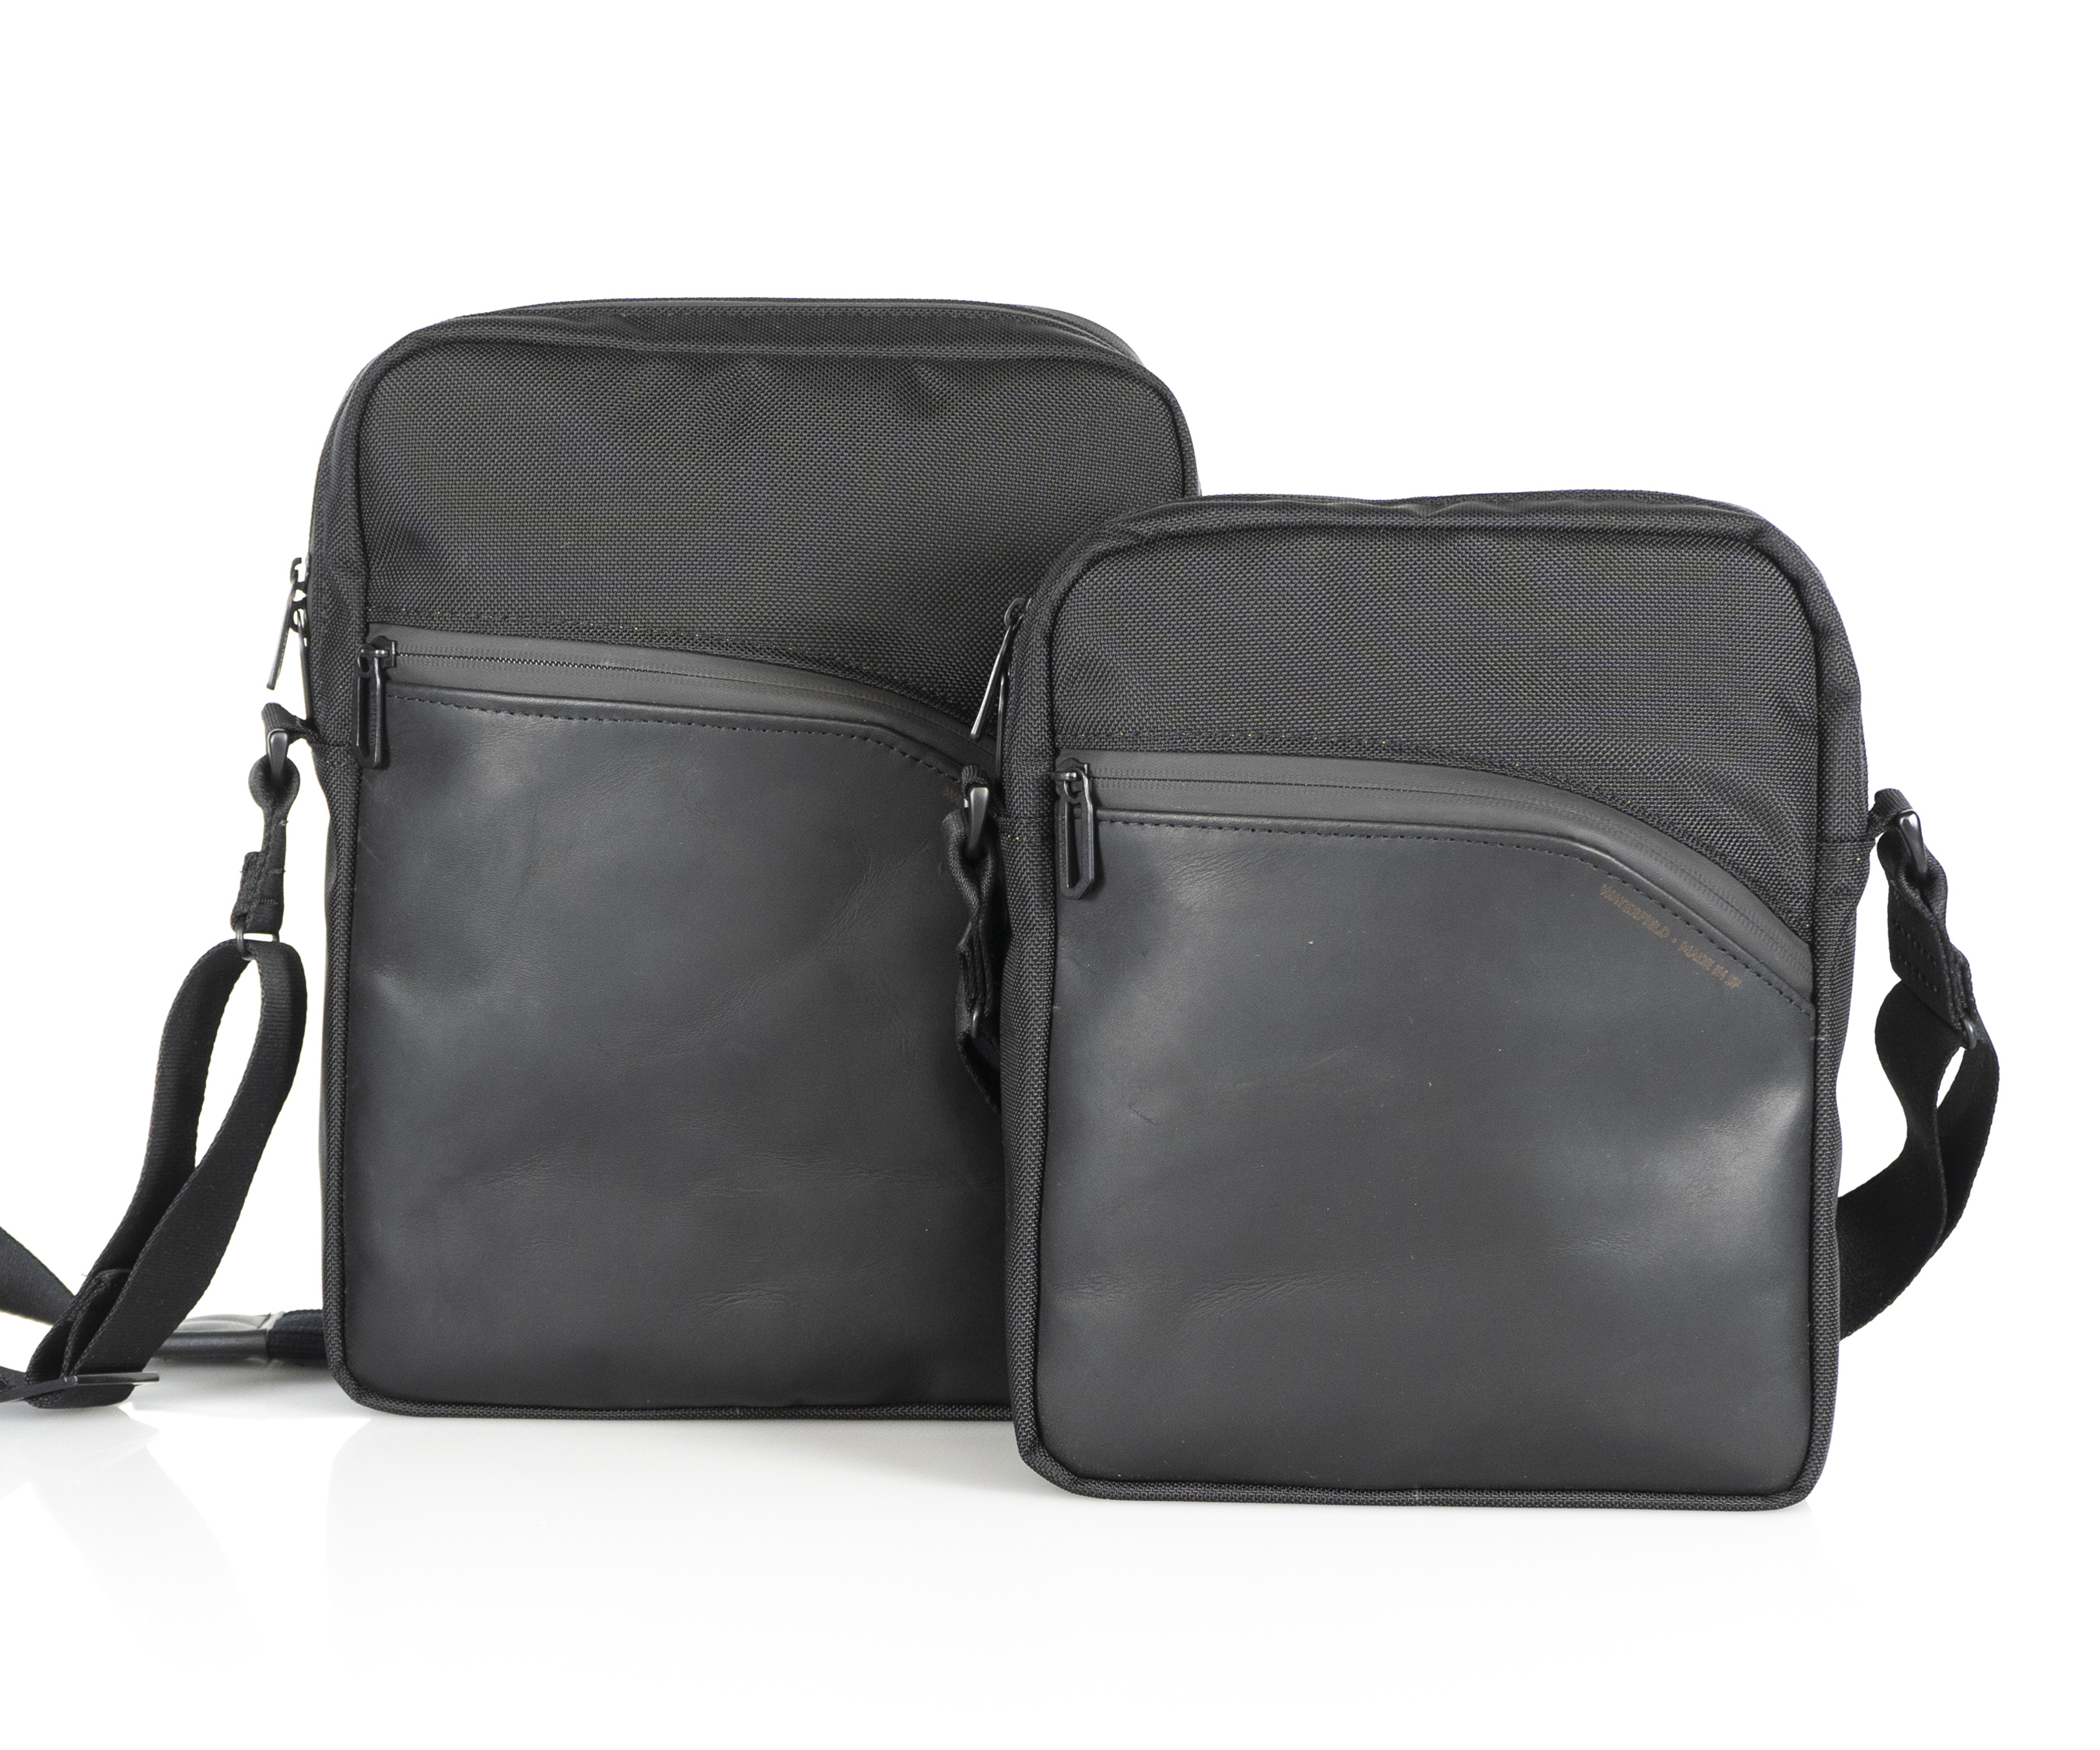 Crossbody bag in black ballistic nylon and full-grain leather